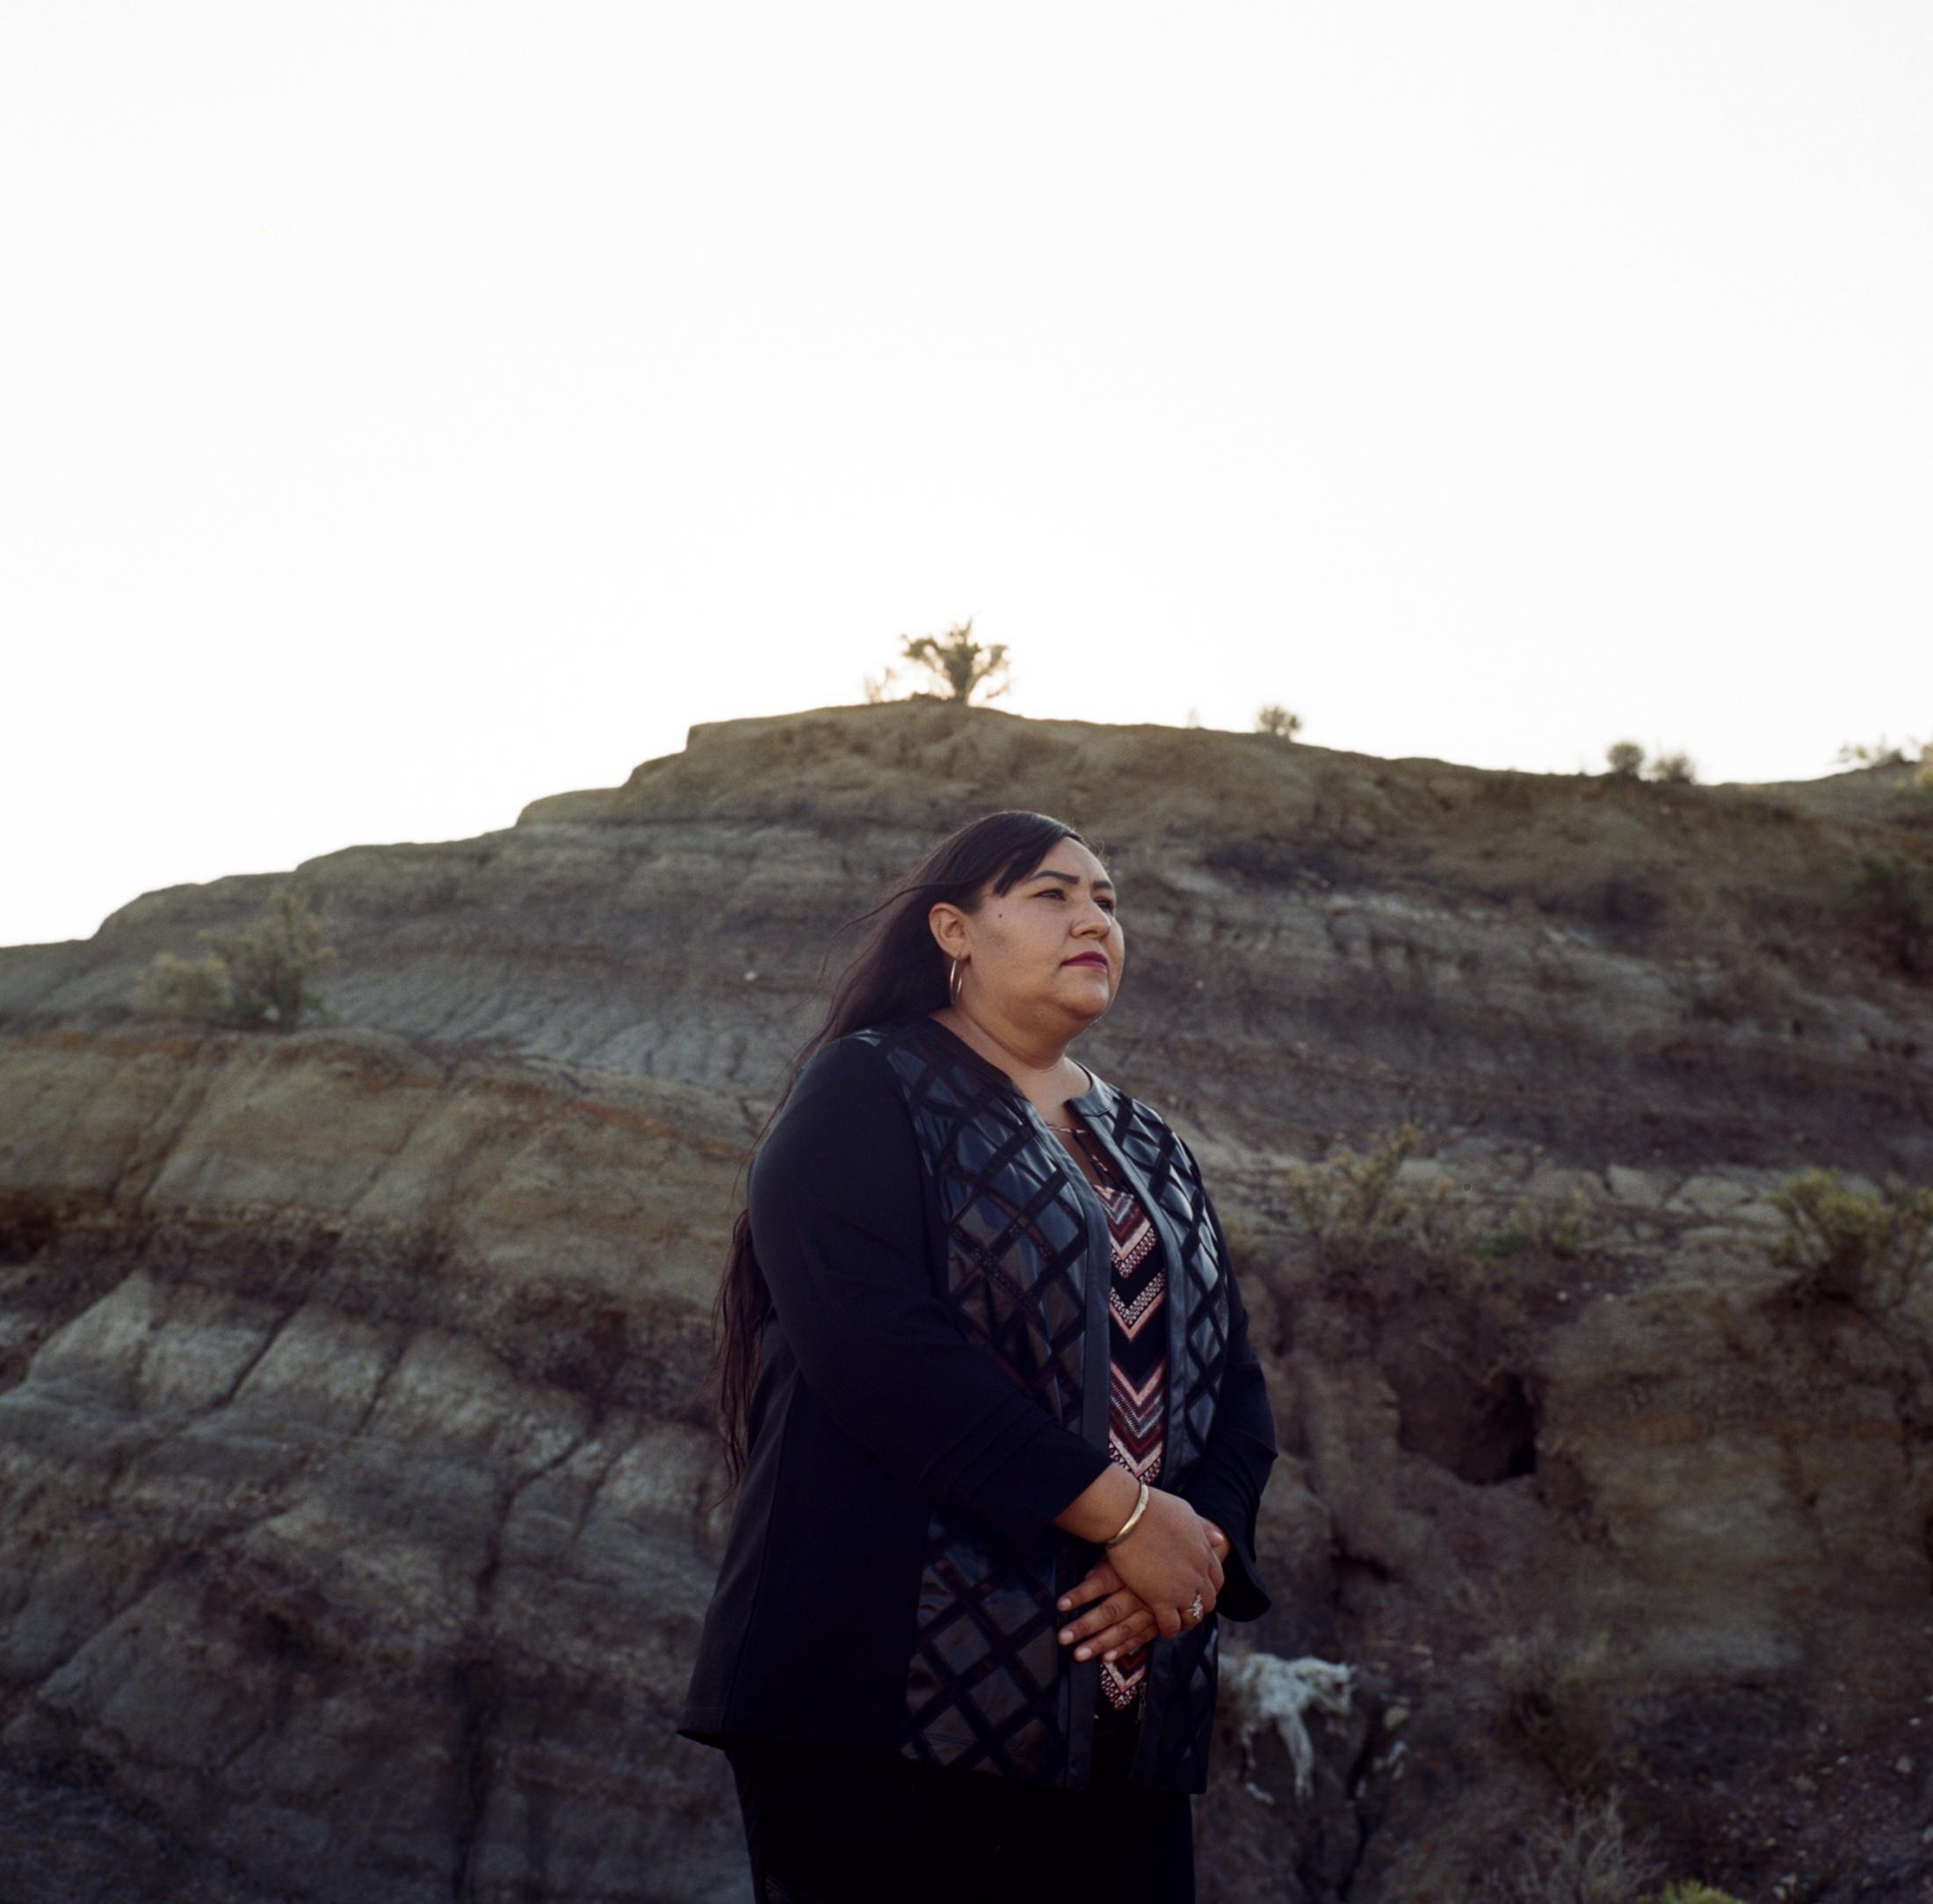 The Bakken oil shale's impact on Native American women